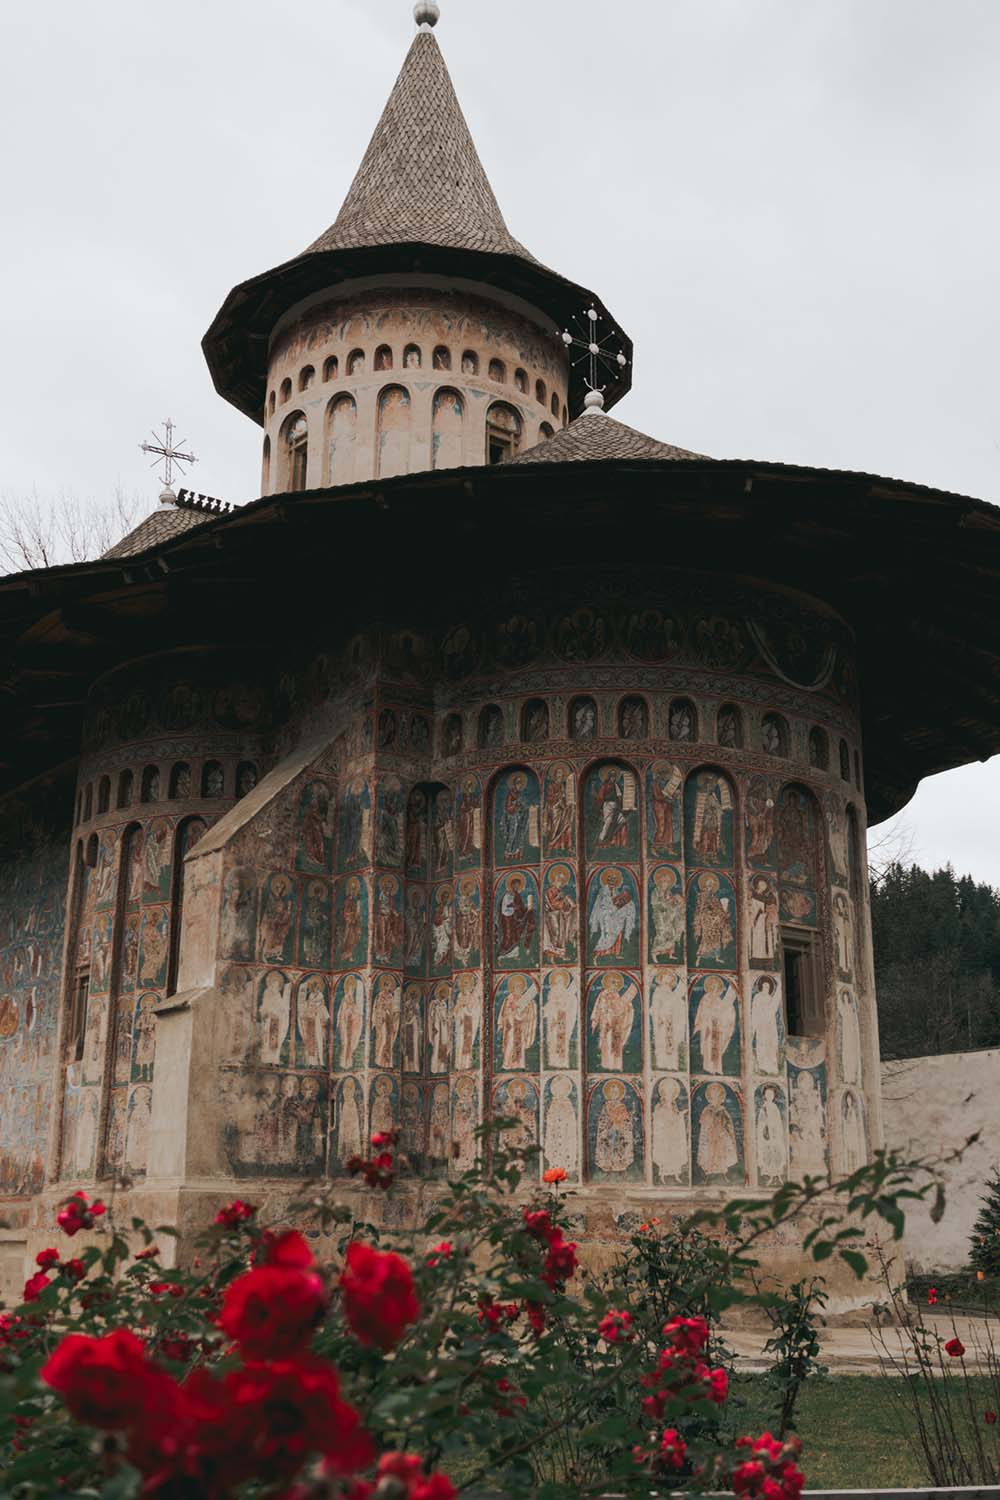 UNESCO Heritage Site Bucovina Painted Church - Romania Road Trip